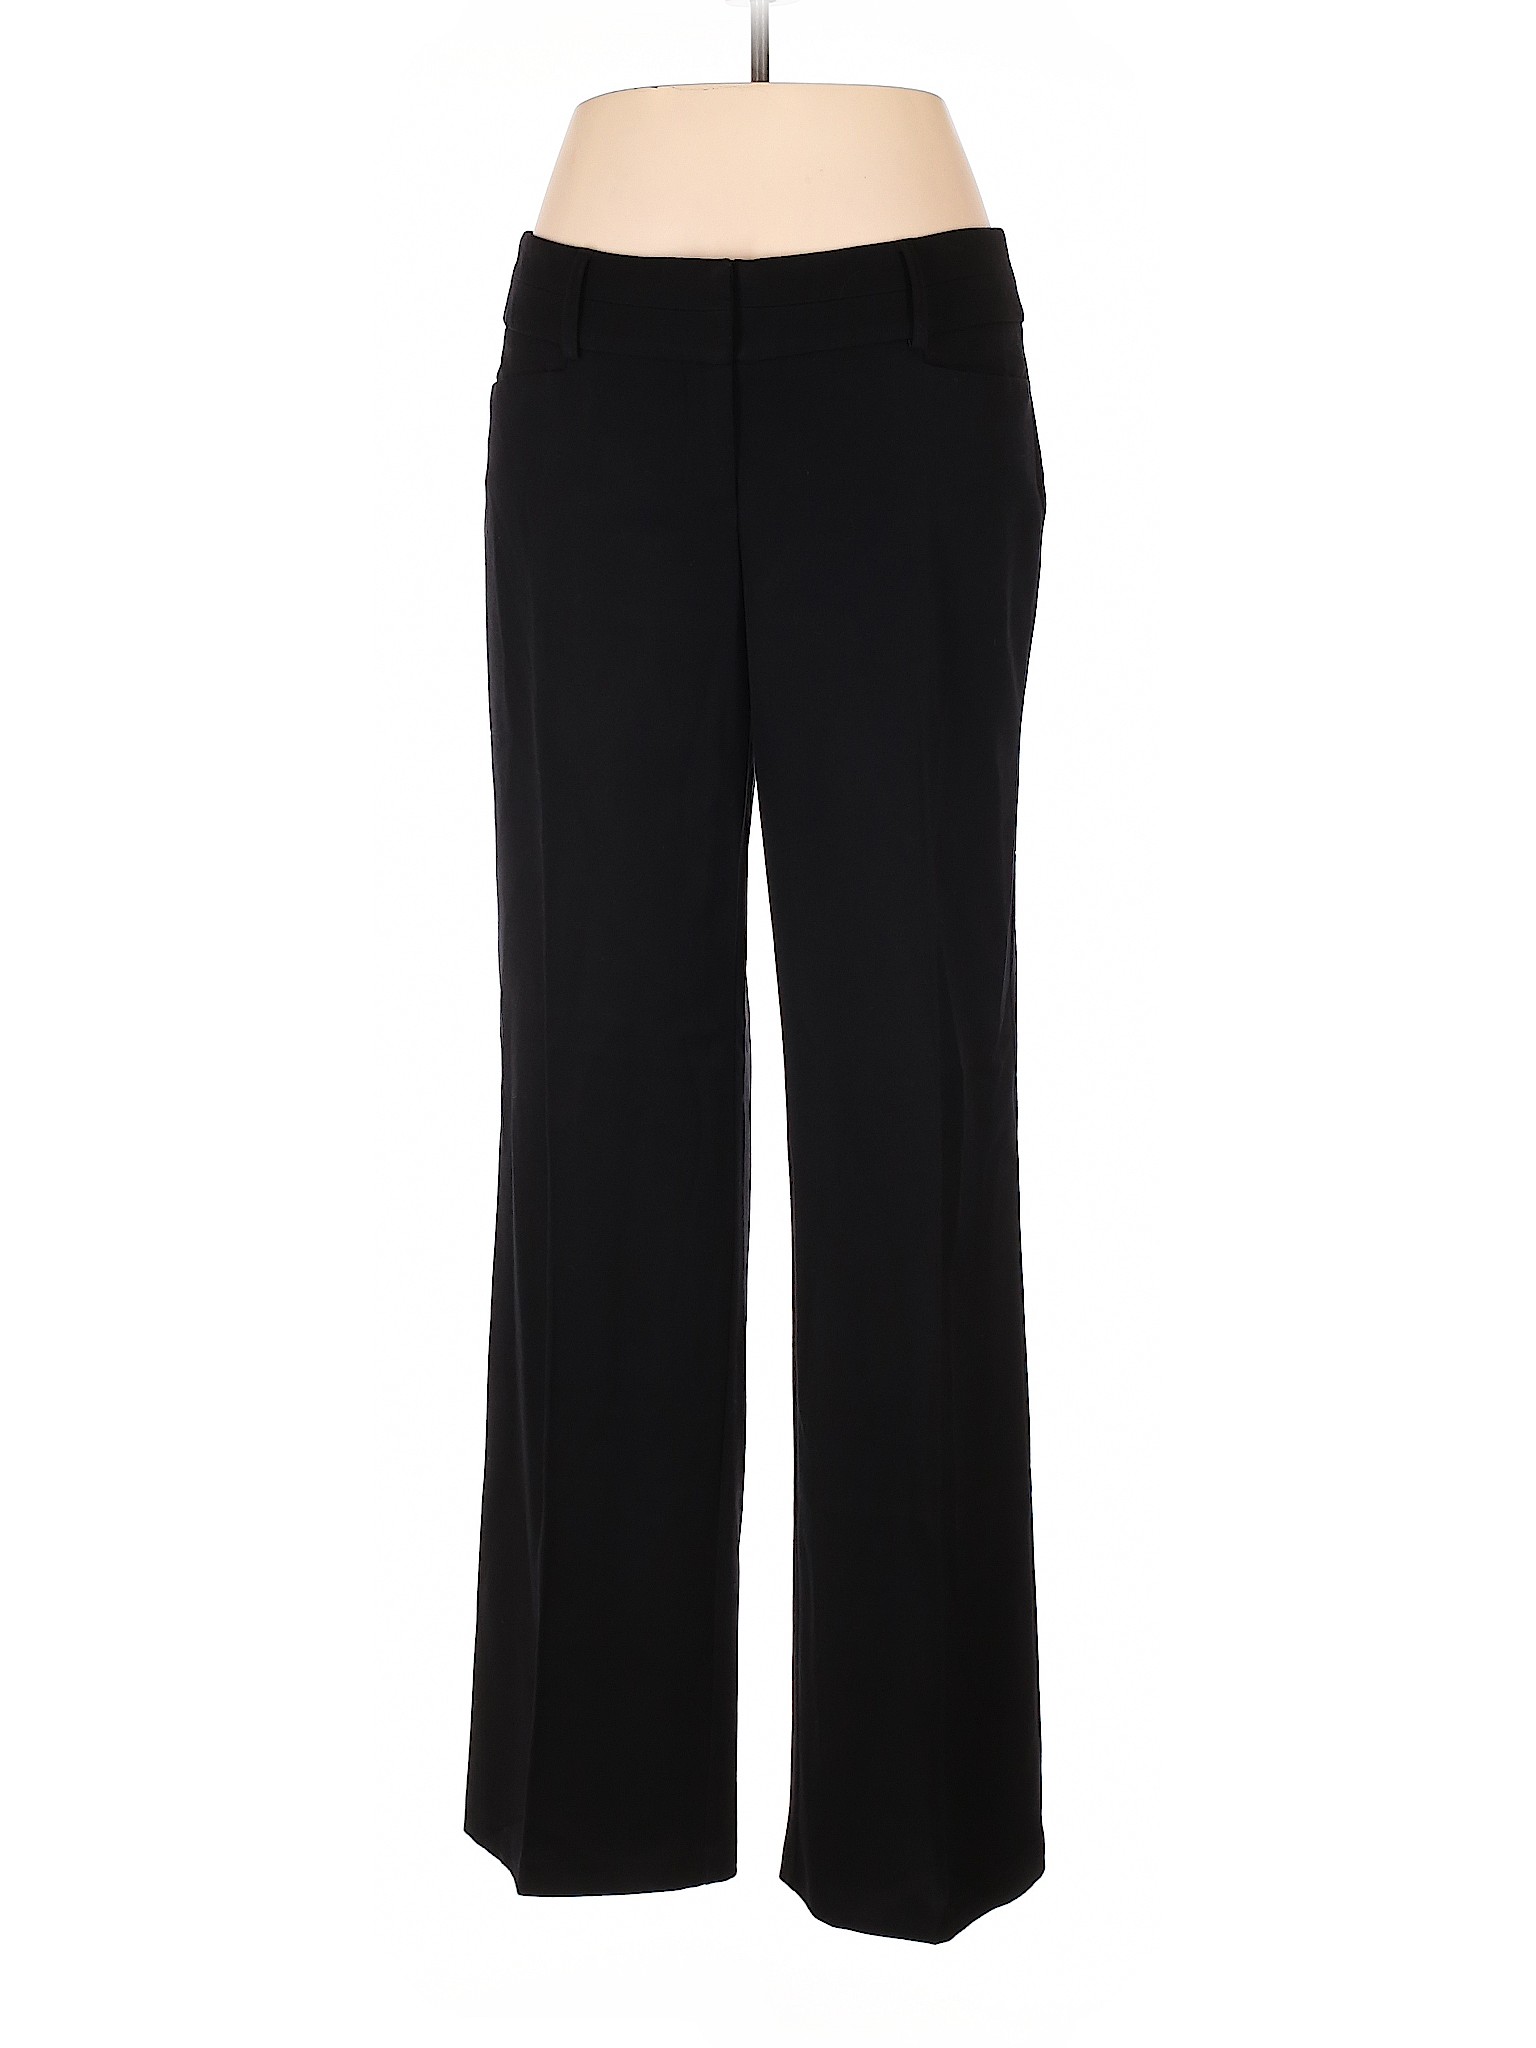 Apt. 9 Women Black Dress Pants 12 | eBay